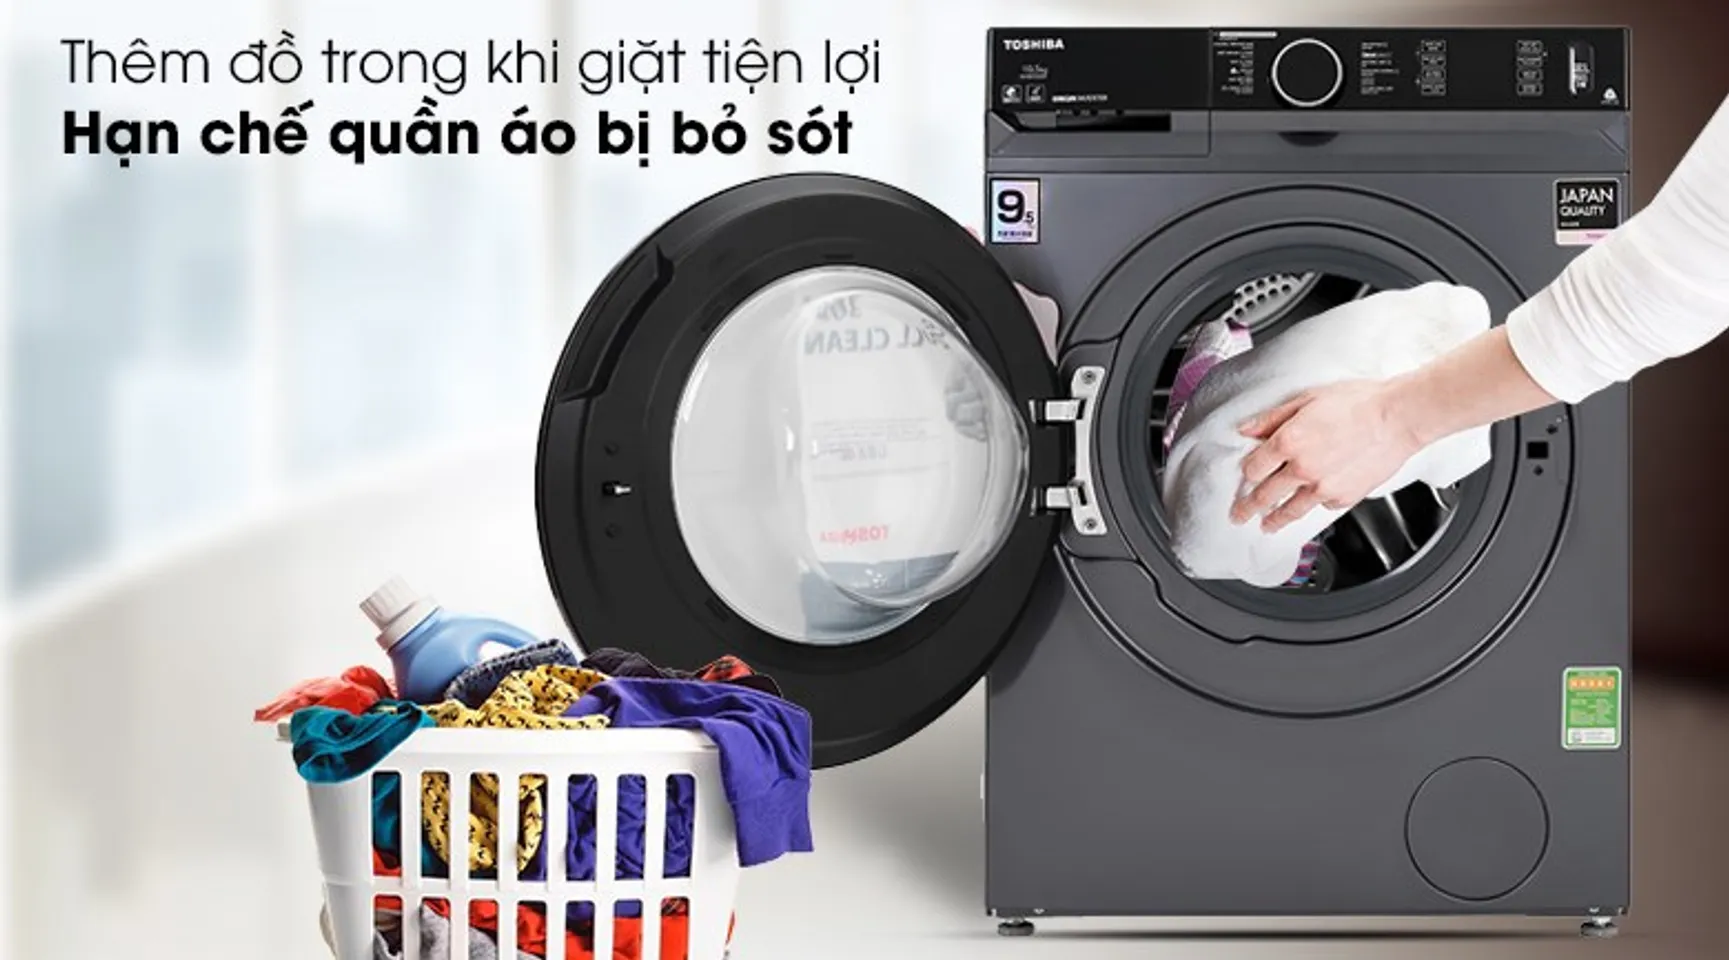 Máy giặt Toshiba Inverter 9.5 Kg TW-BK105G4V(MG) - Thêm đồ trong khi giặt